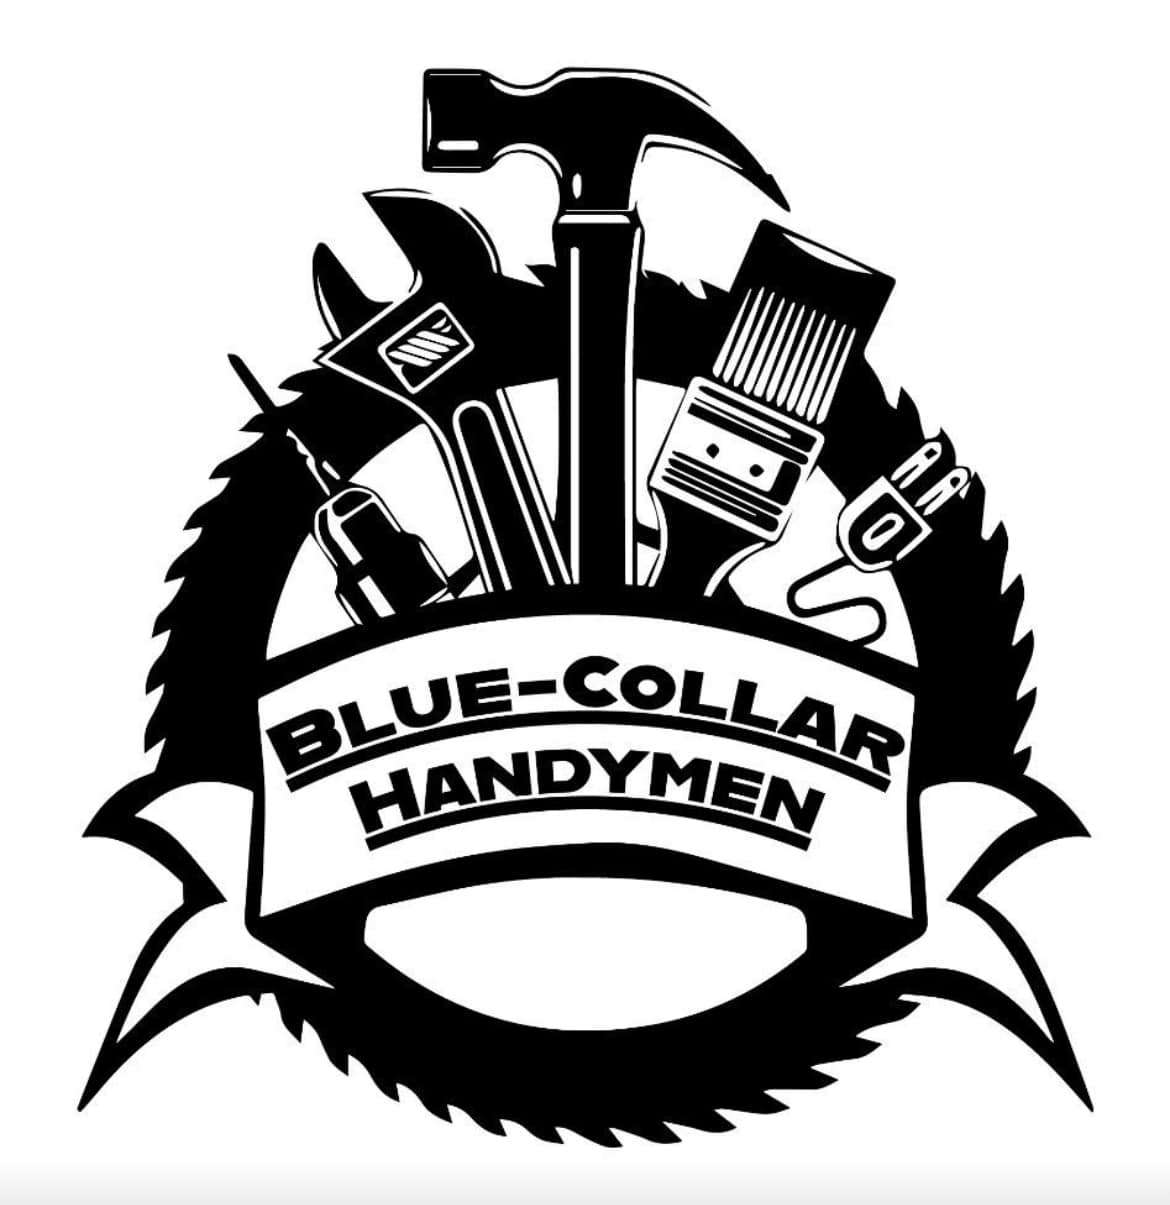 Blue-Collar Handymen Logo